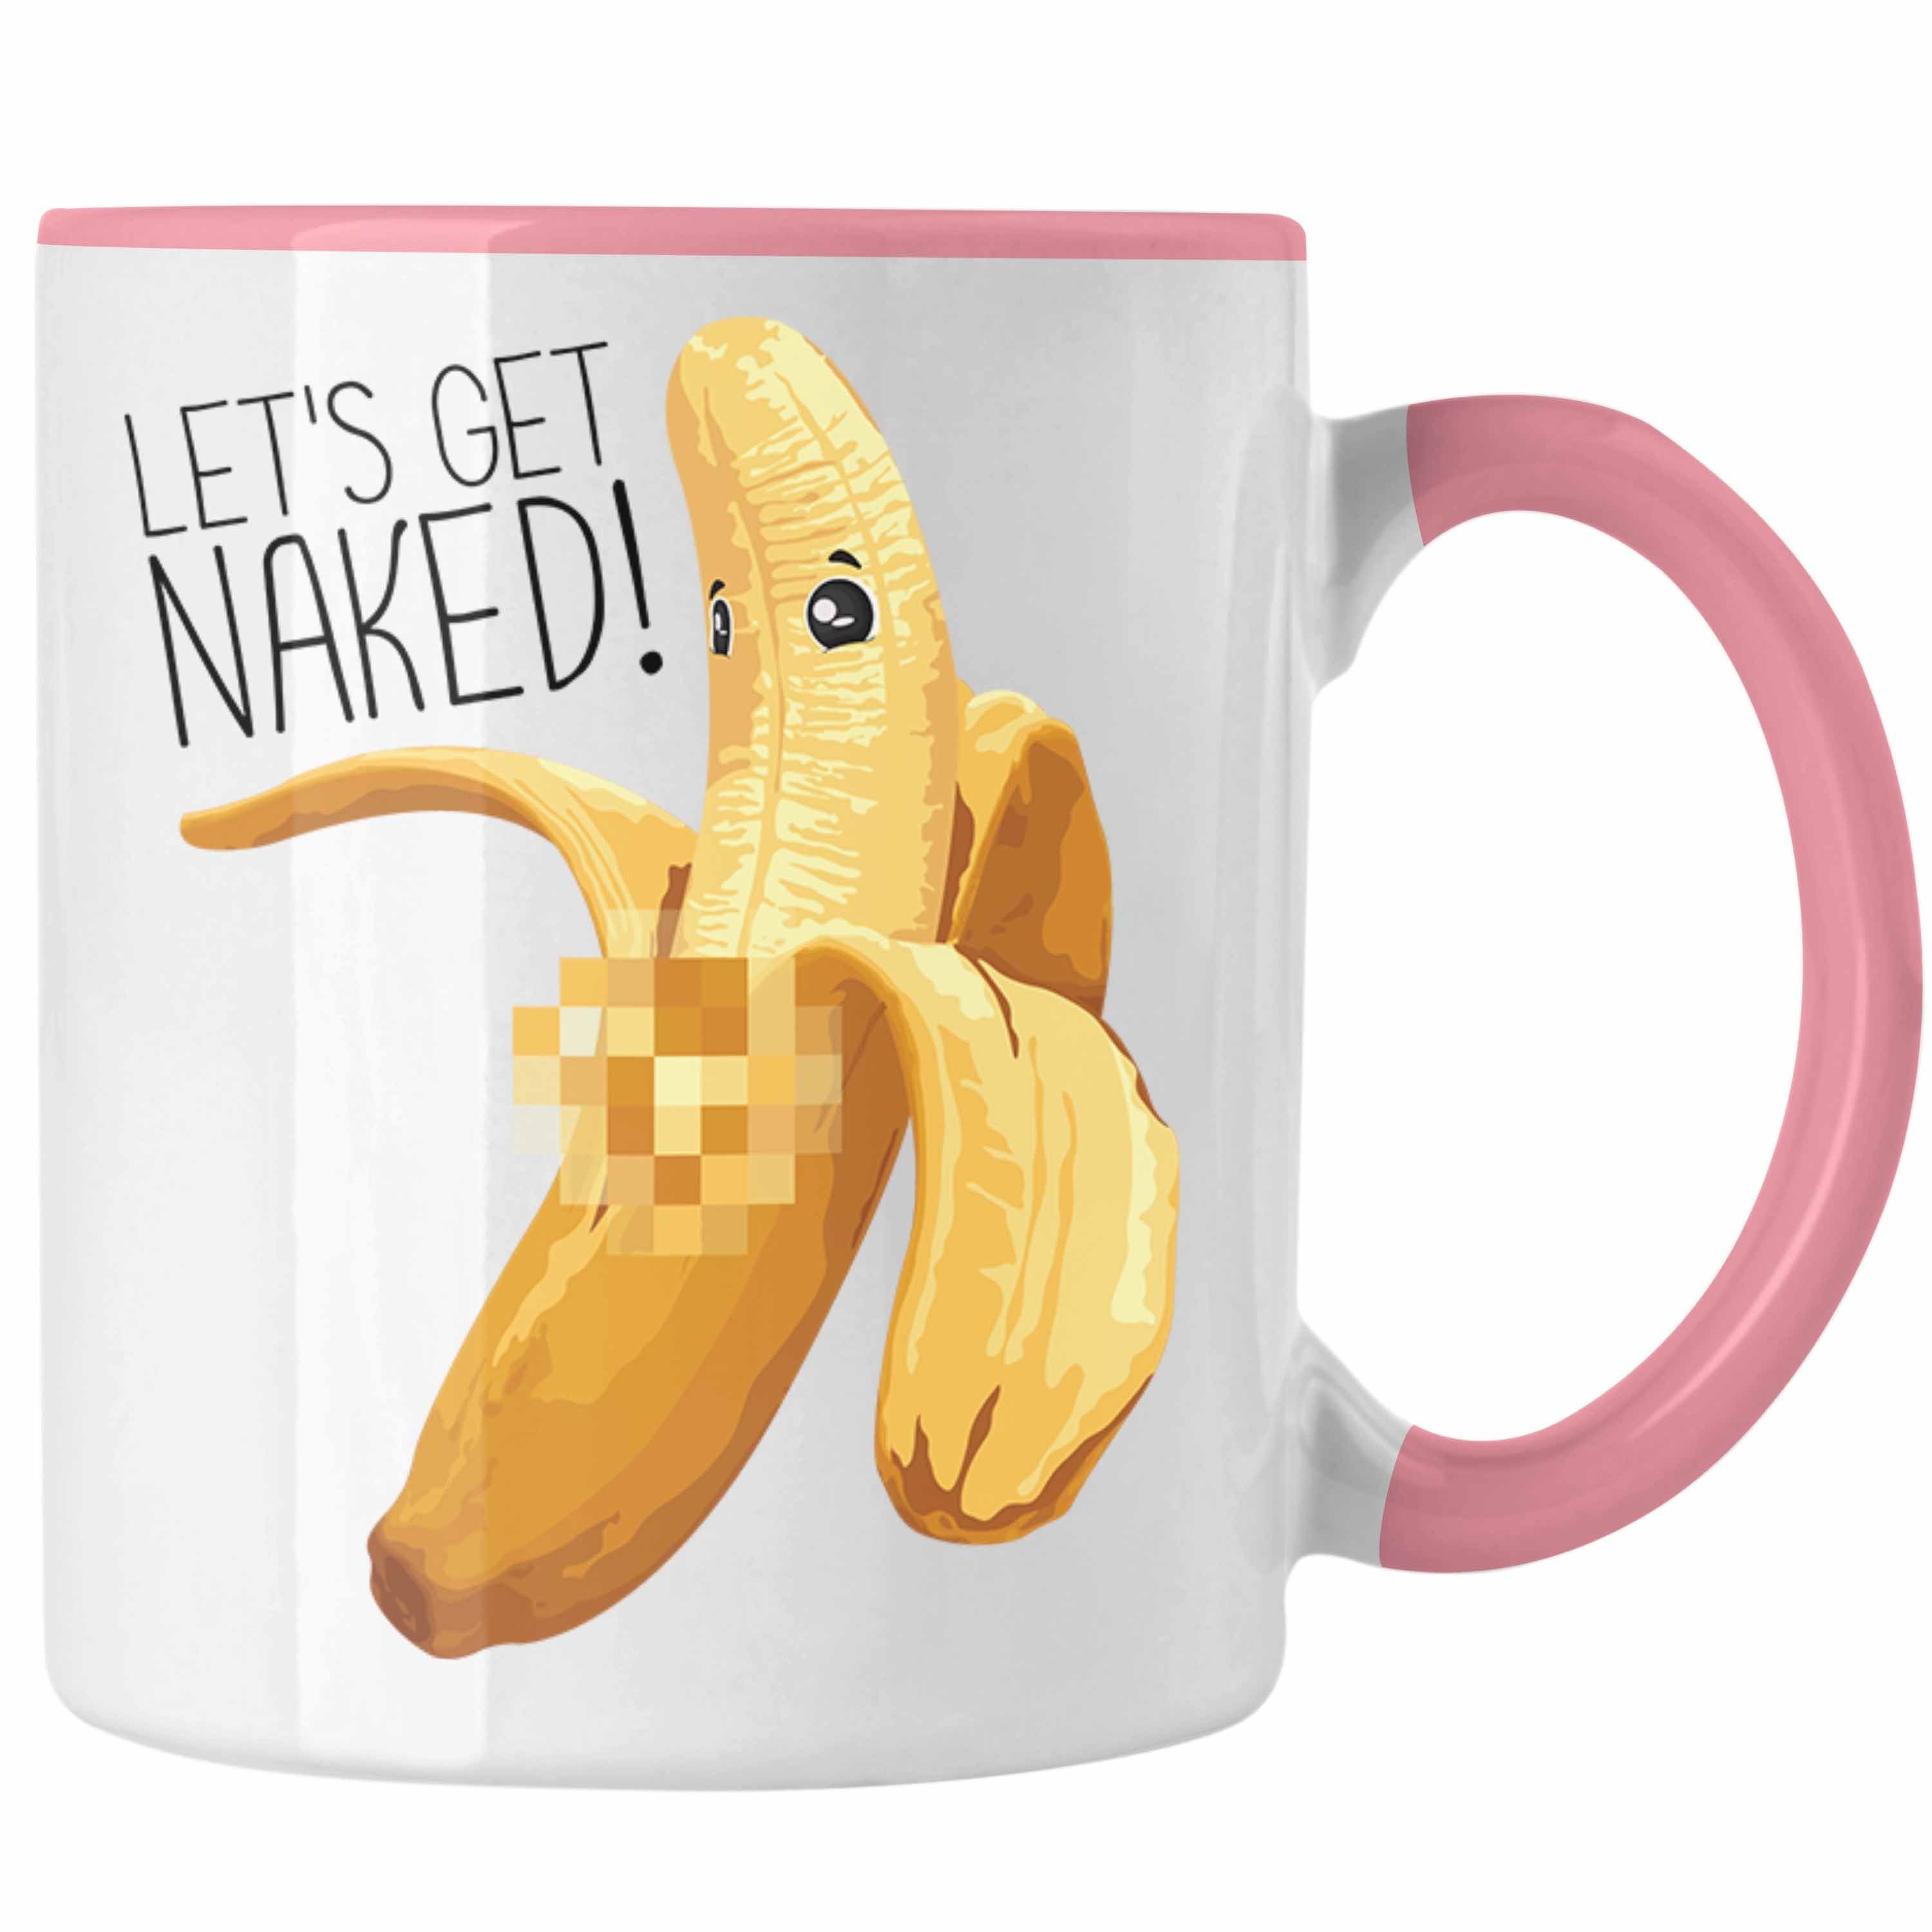 Trendation Tasse Banane Lets Get Naked Tasse Geschenk Striptease Erwachsener Humor Bech Rosa